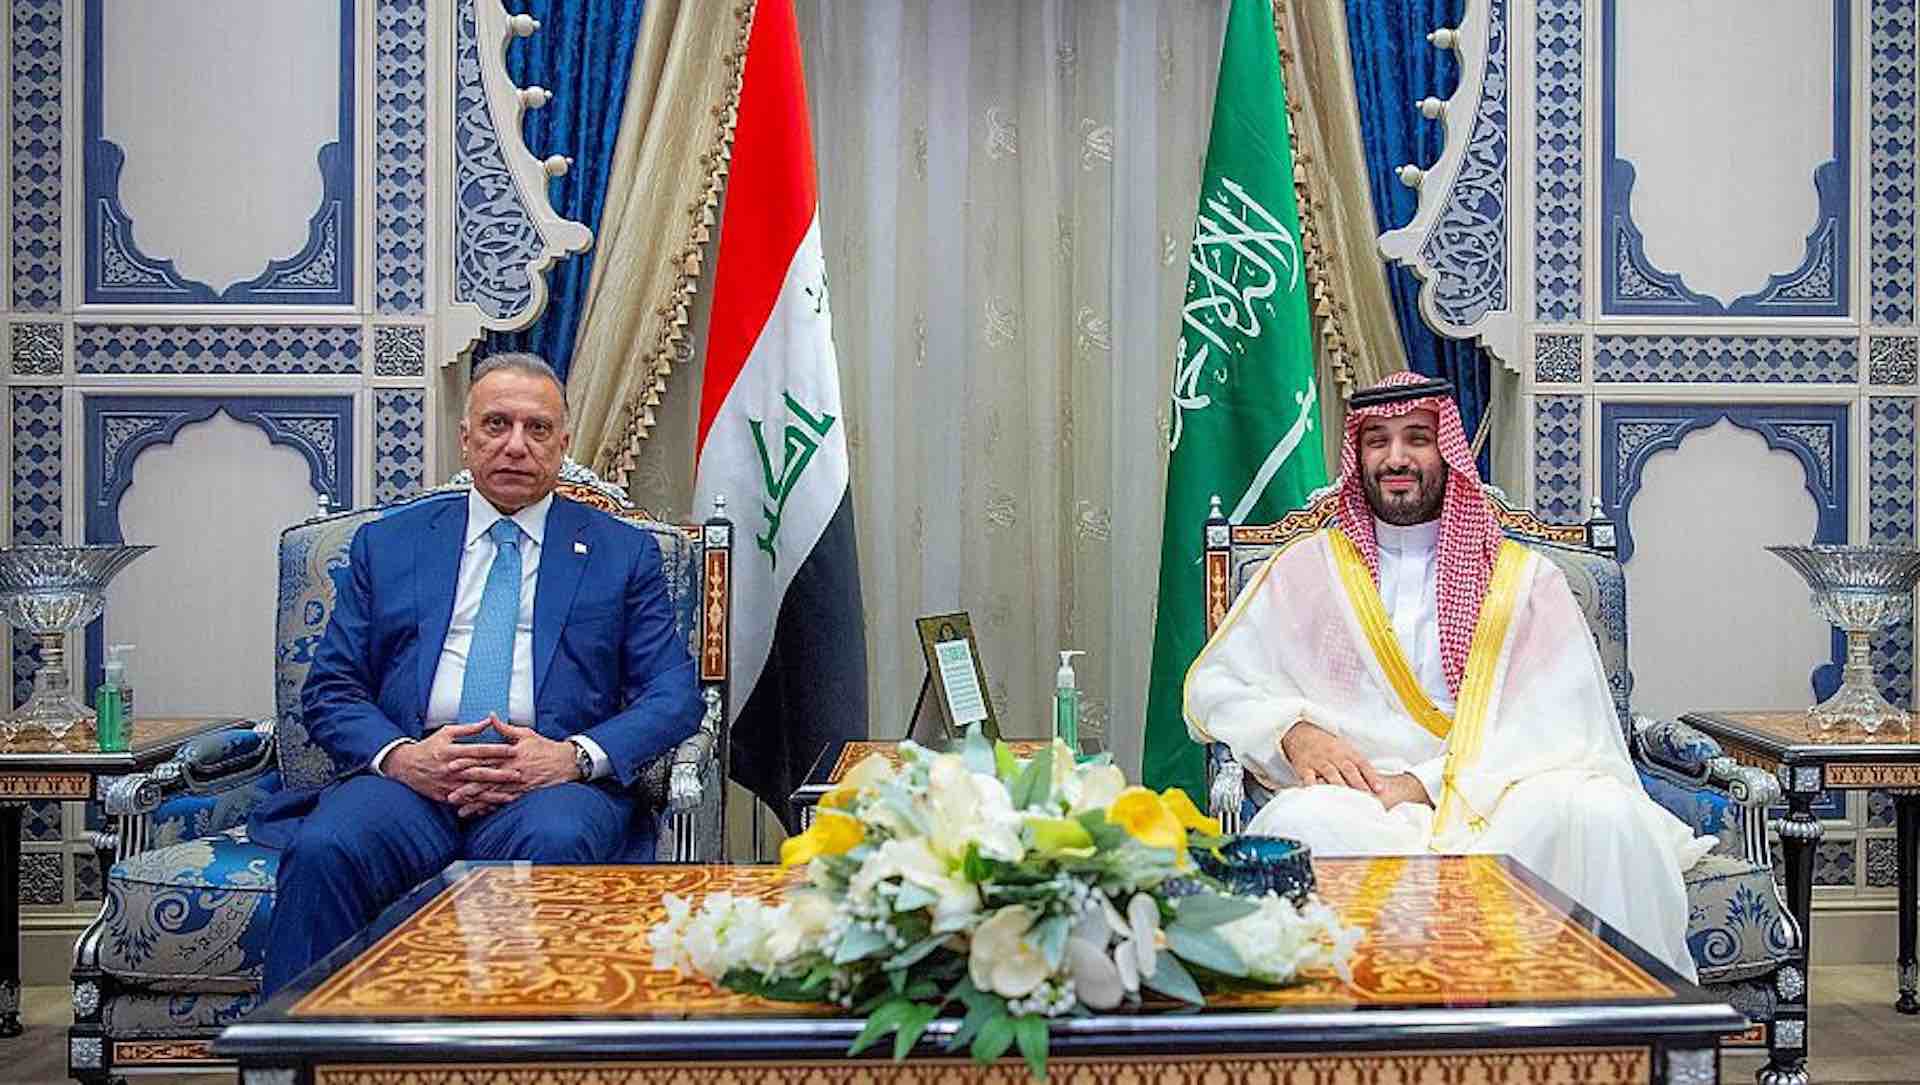 Iraqi Prime Minister and Saudi Crown Prince review bilateral ties